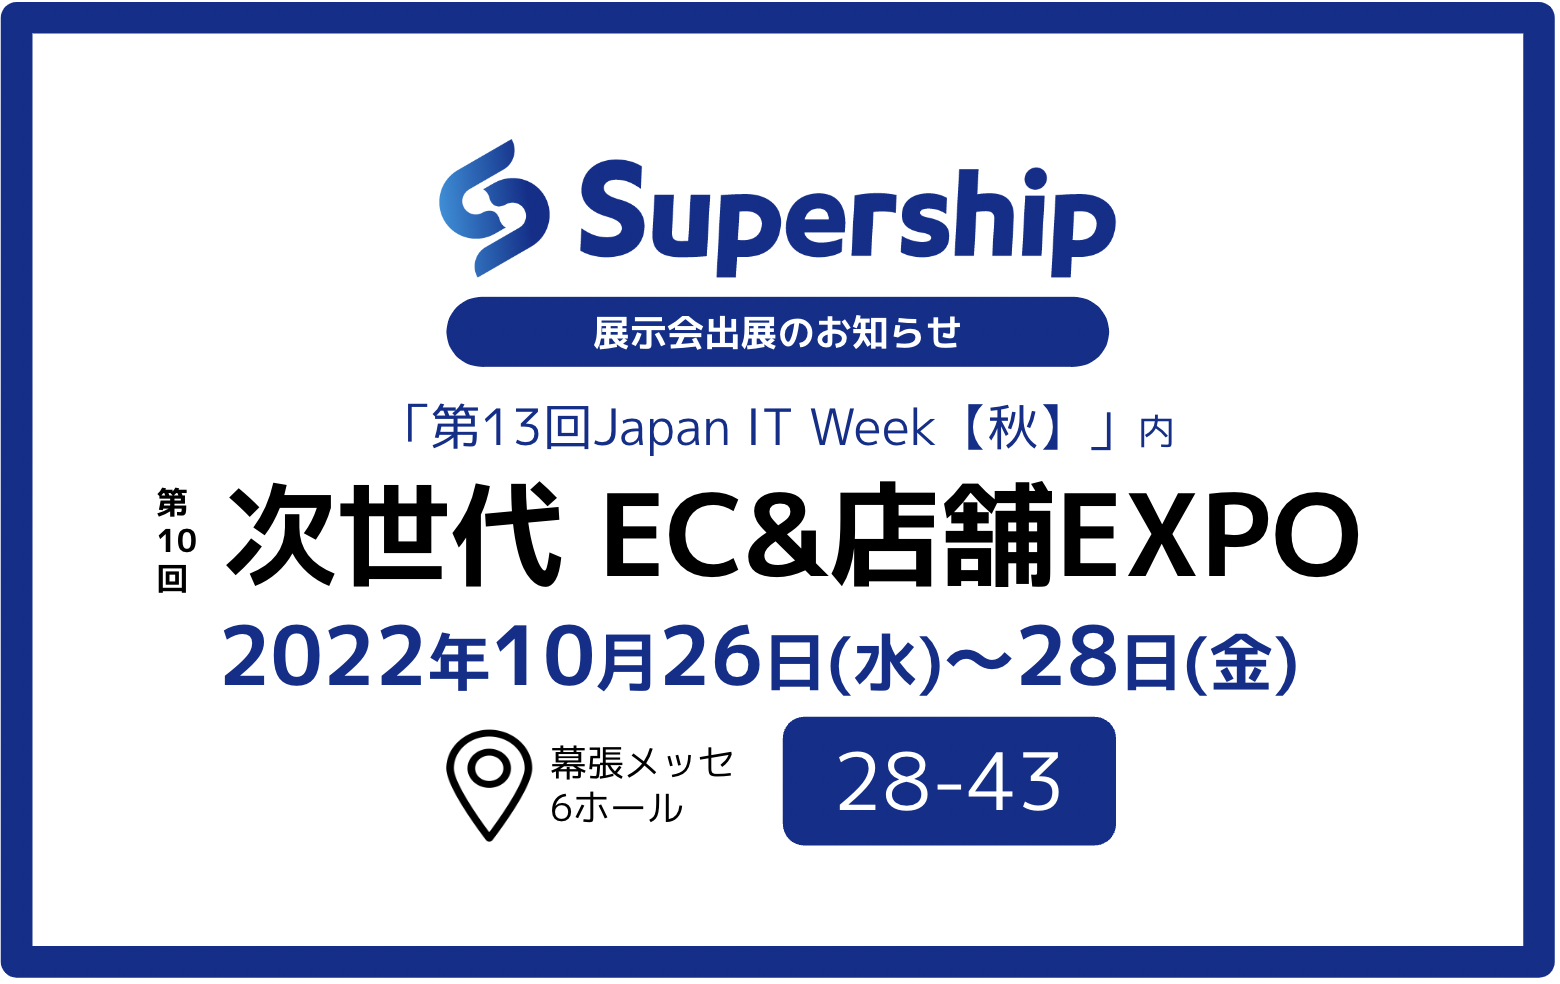  SupershipのS4が第10回 次世代 EC&店舗EXPO【秋】に出展